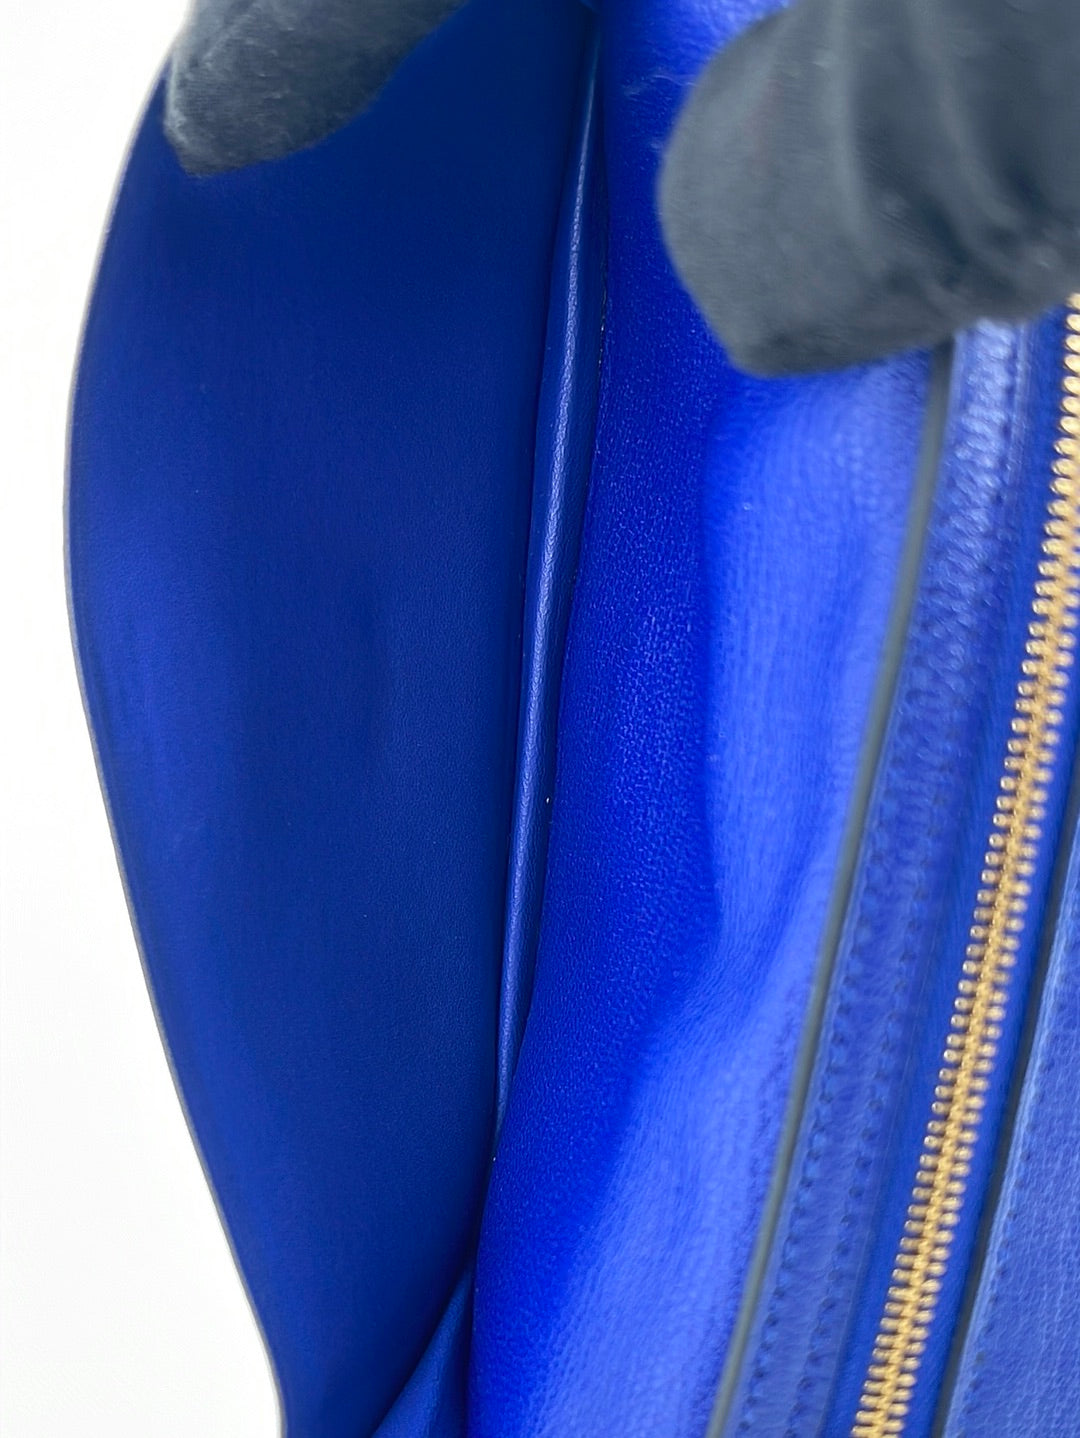 Preloved Hermes Bearn Epsom Blue Leather Long Bifold Wallet CTI001KC 060923 $200 OFF